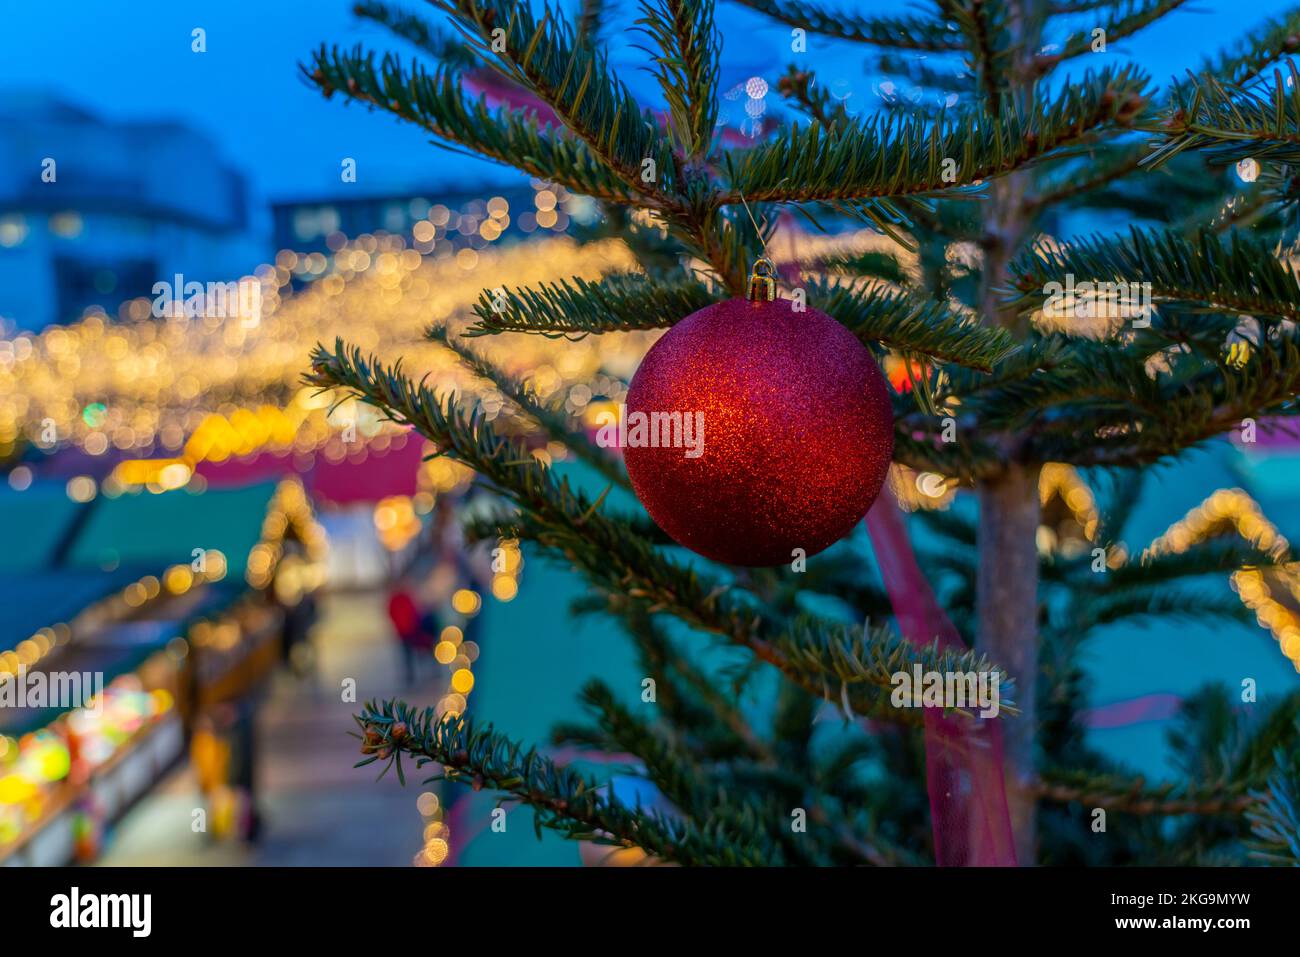 Pre-Christmas period, Christmas market on Kennedyplatz in Essen city centre, Christmas tree decorations, NRW, Germany, Stock Photo